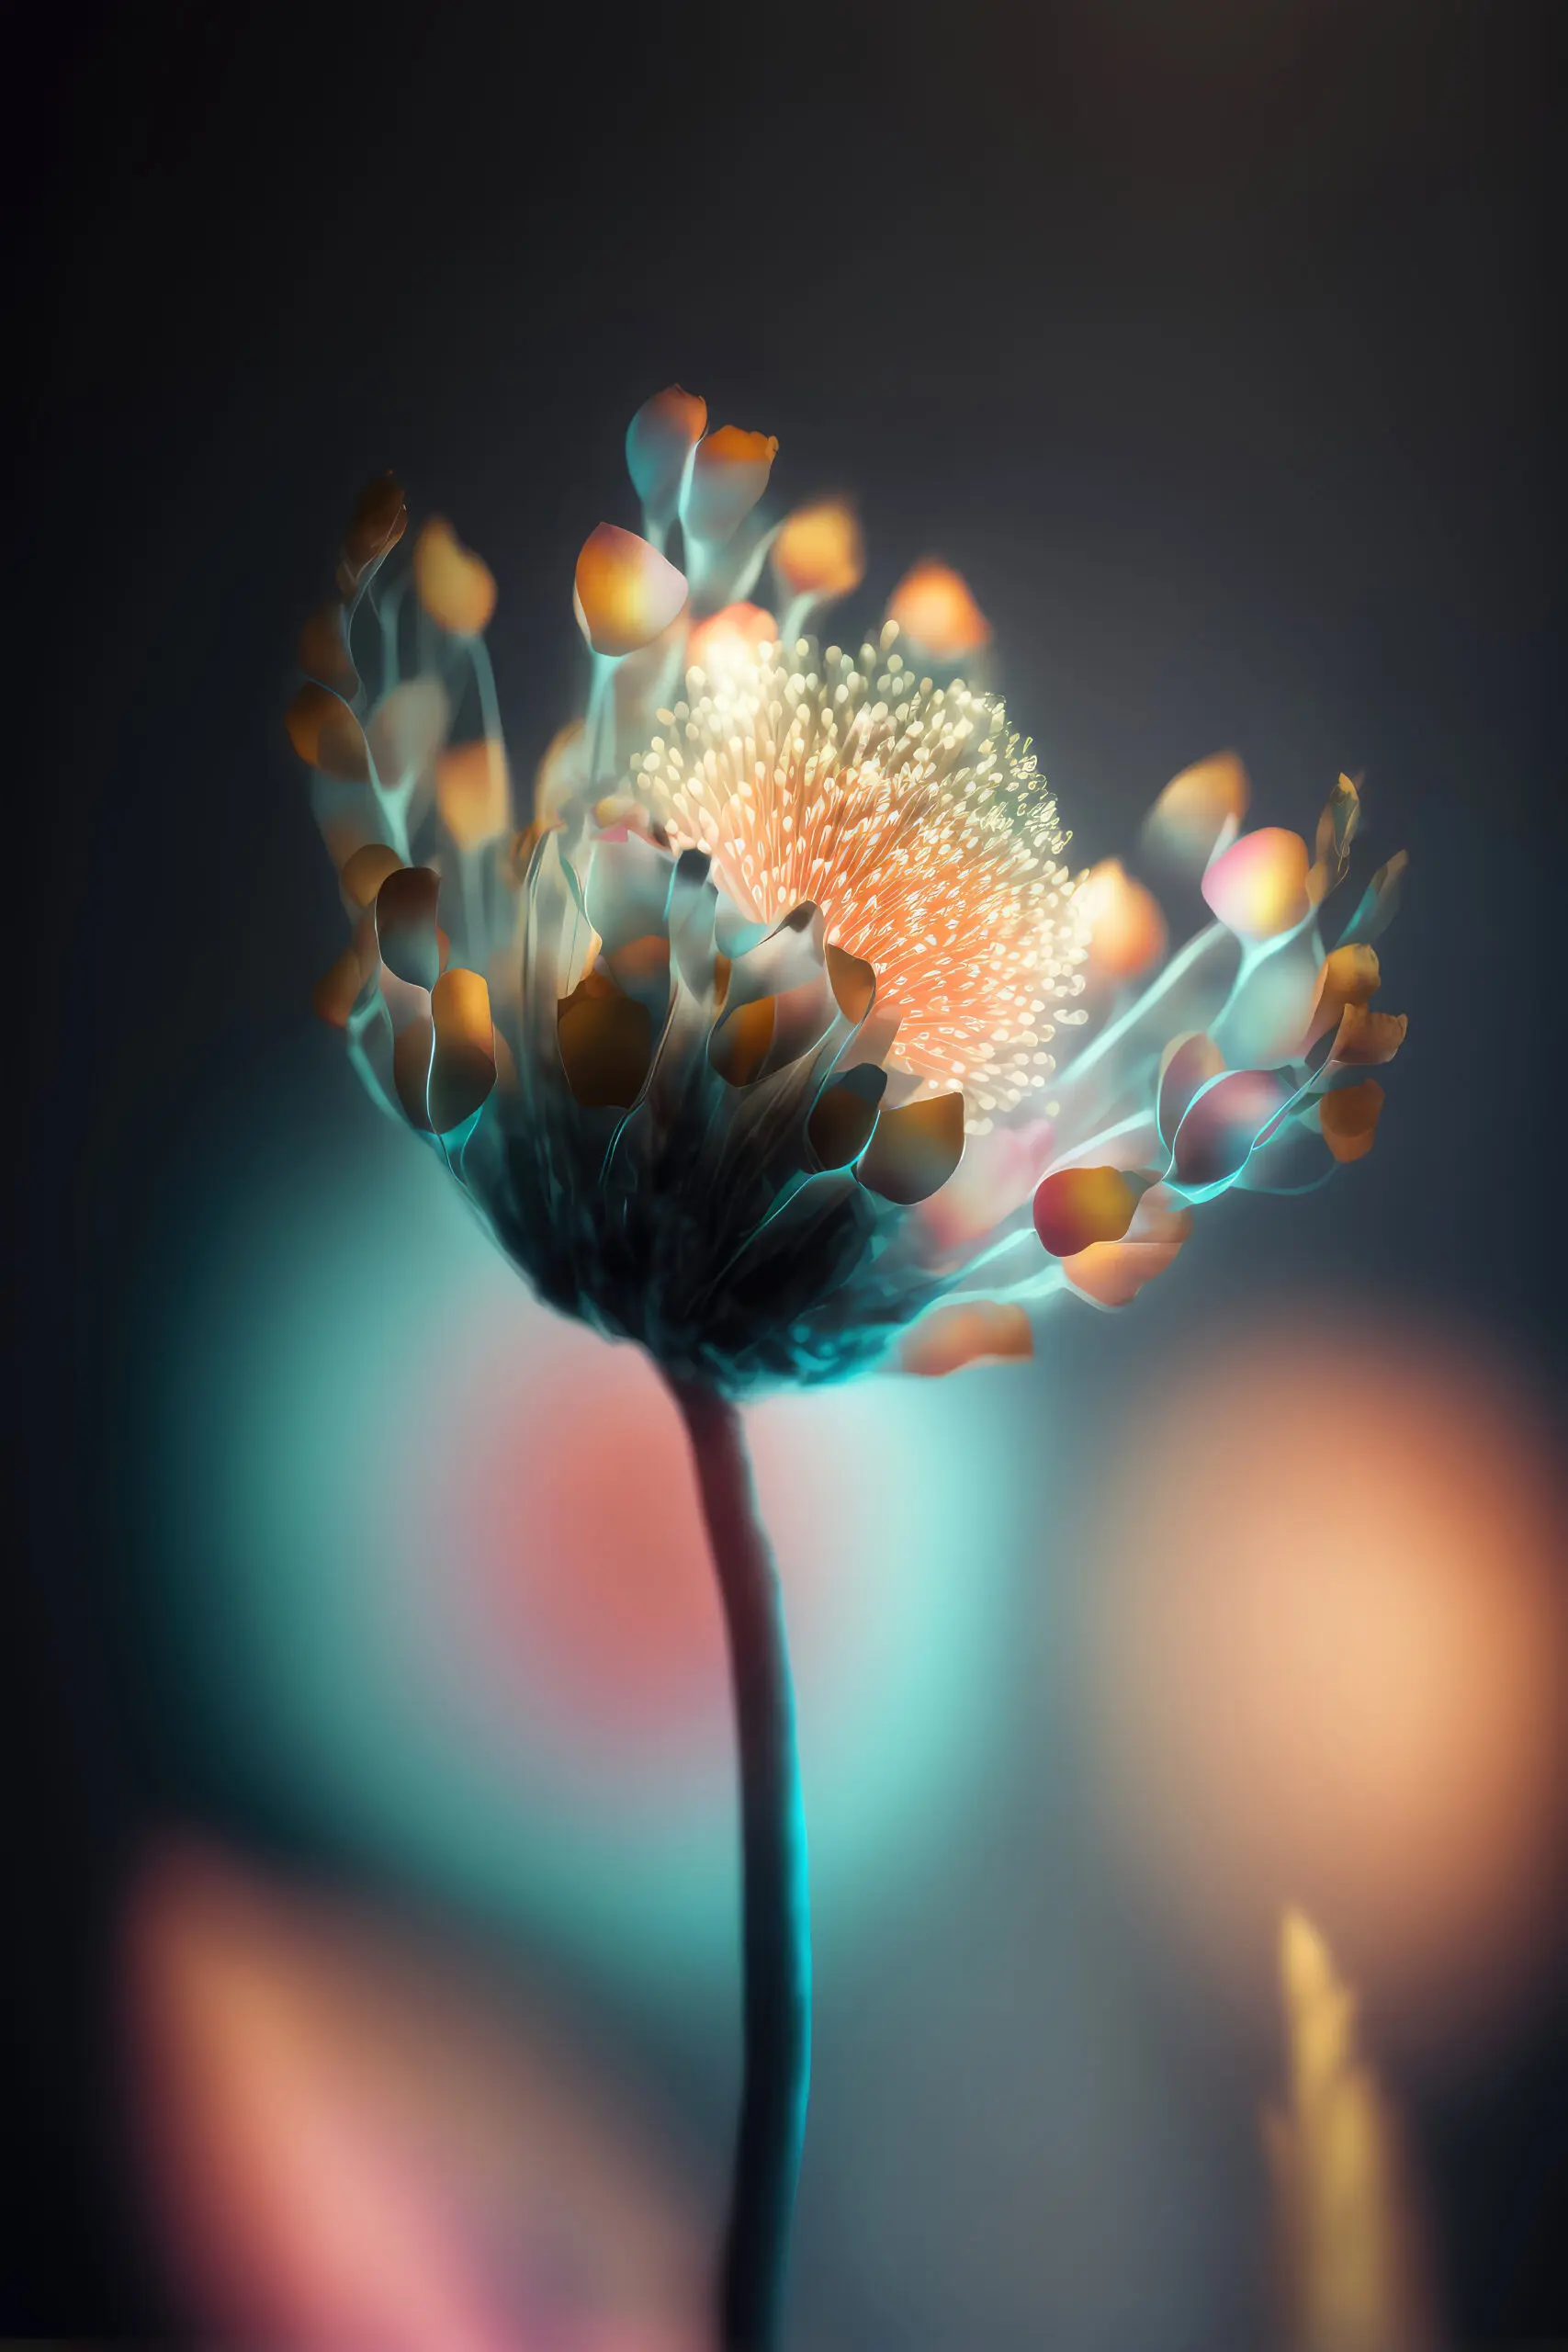 Wandbild (21943) Colorful Glowing Flower By Treechild präsentiert: Natur